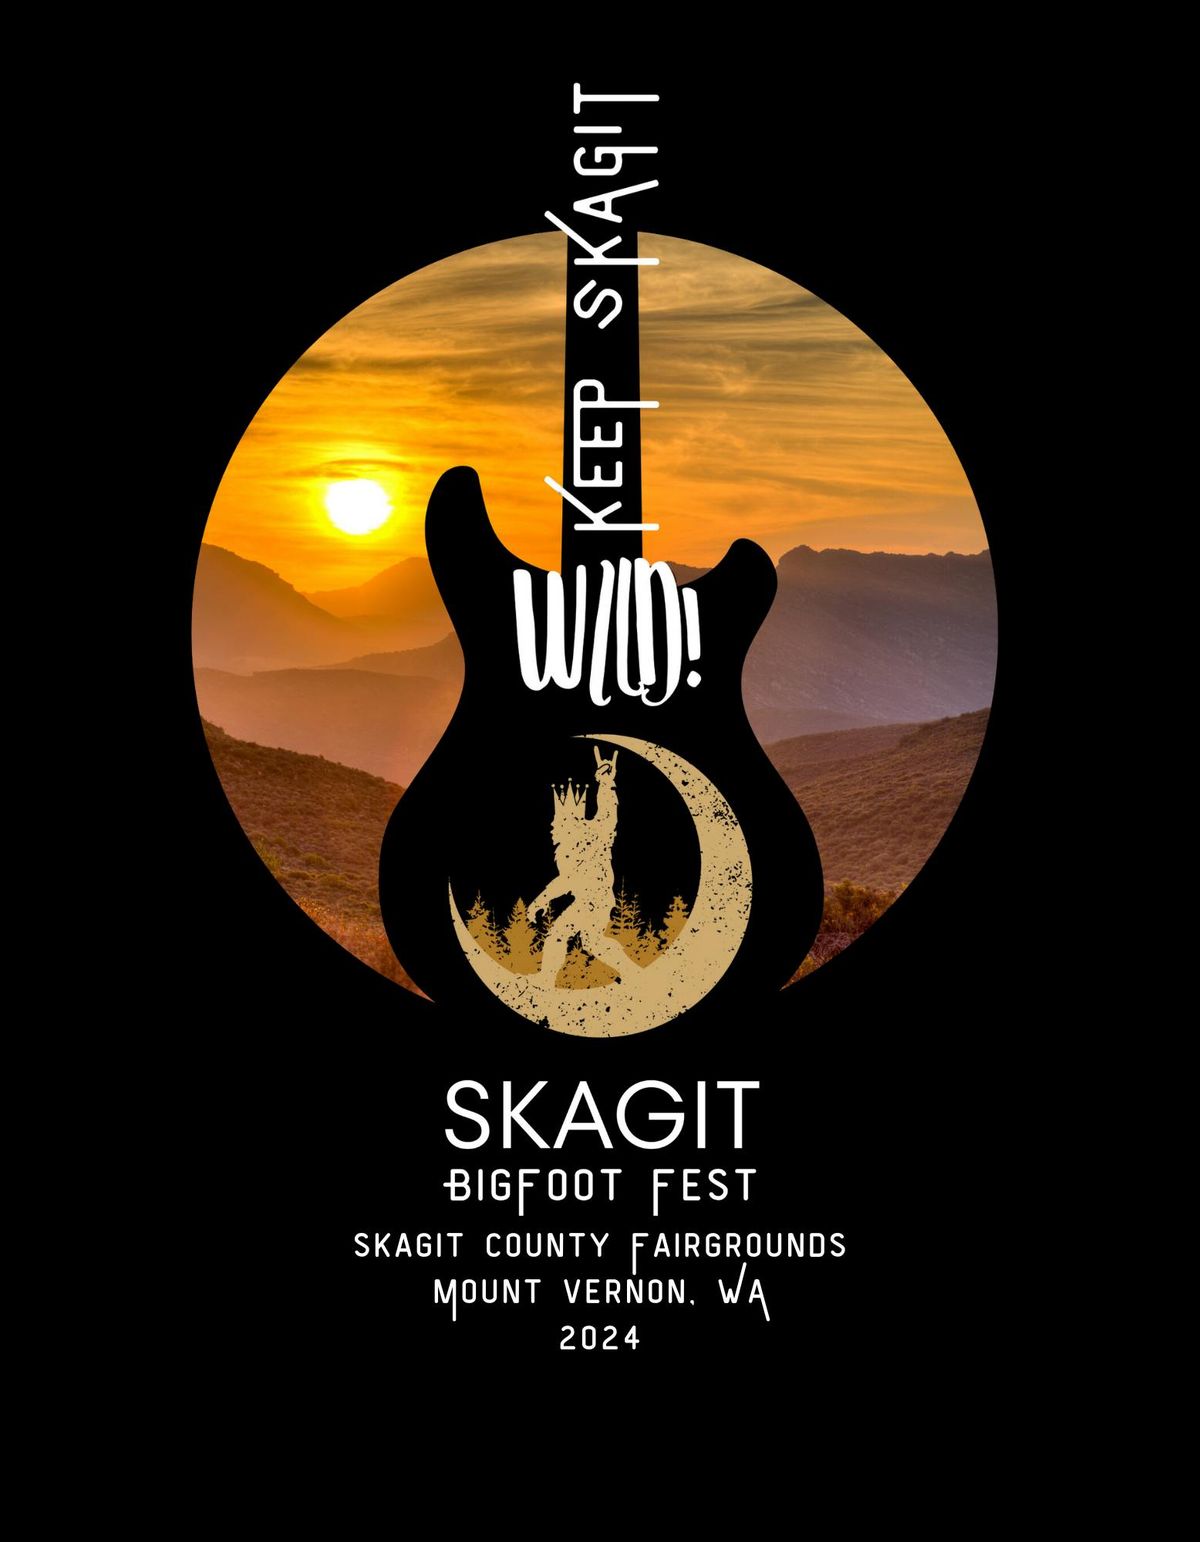 Skagit Bigfoot Fest 5K Fun Run